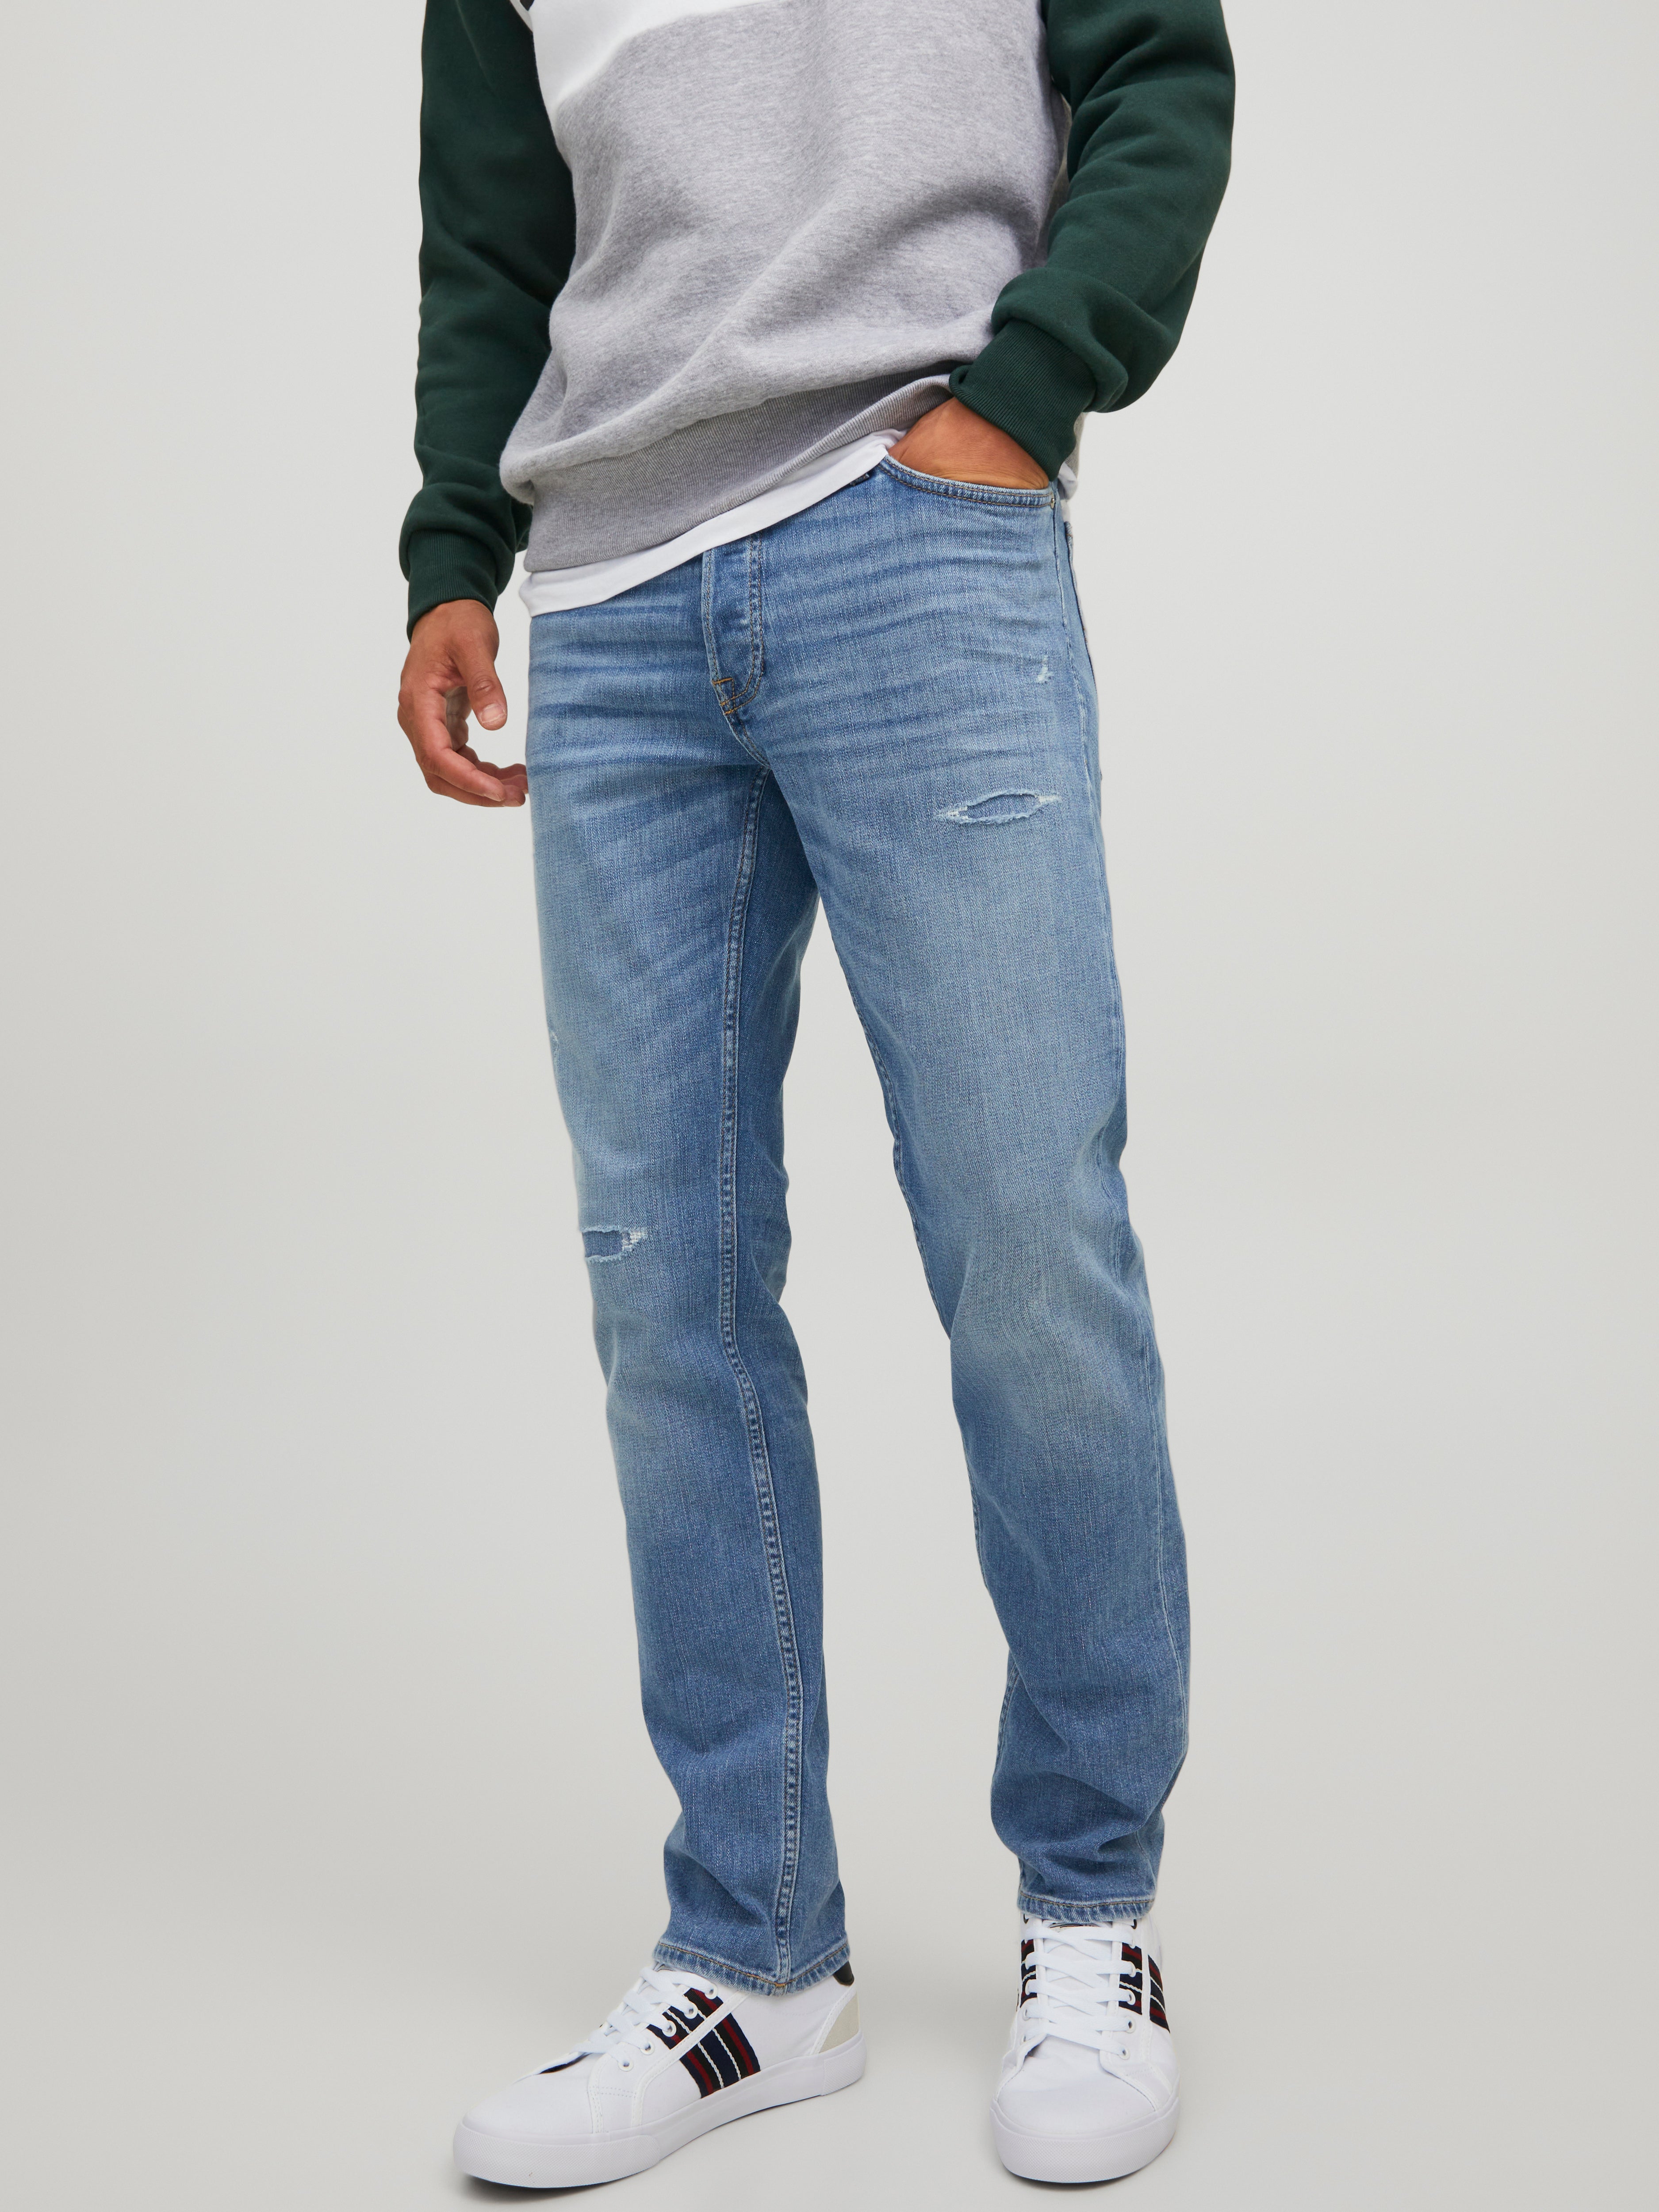 MEN FASHION Jeans Worn-in Jack & Jones shorts jeans discount 56% Gray 46                  EU 